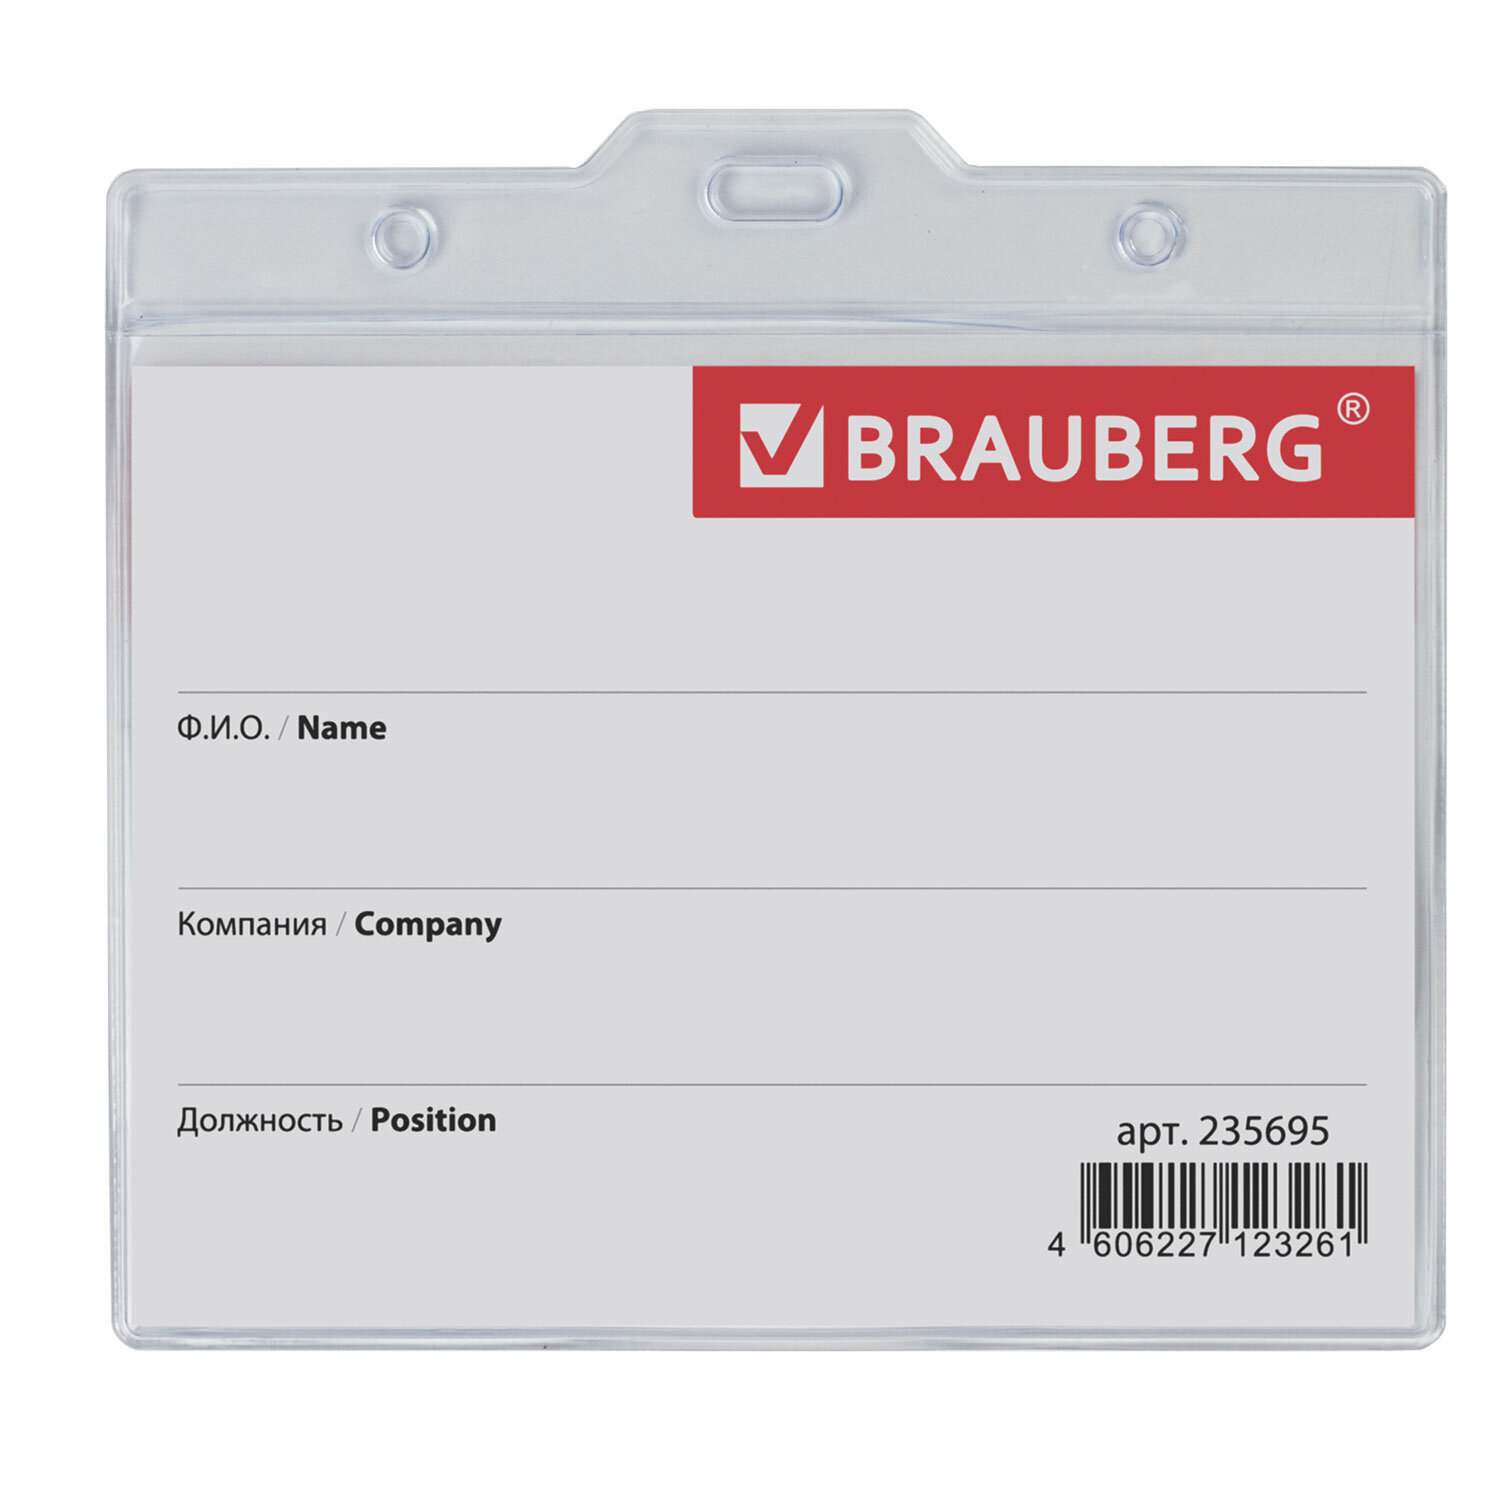 Brauberg - BRAUBERG 235695